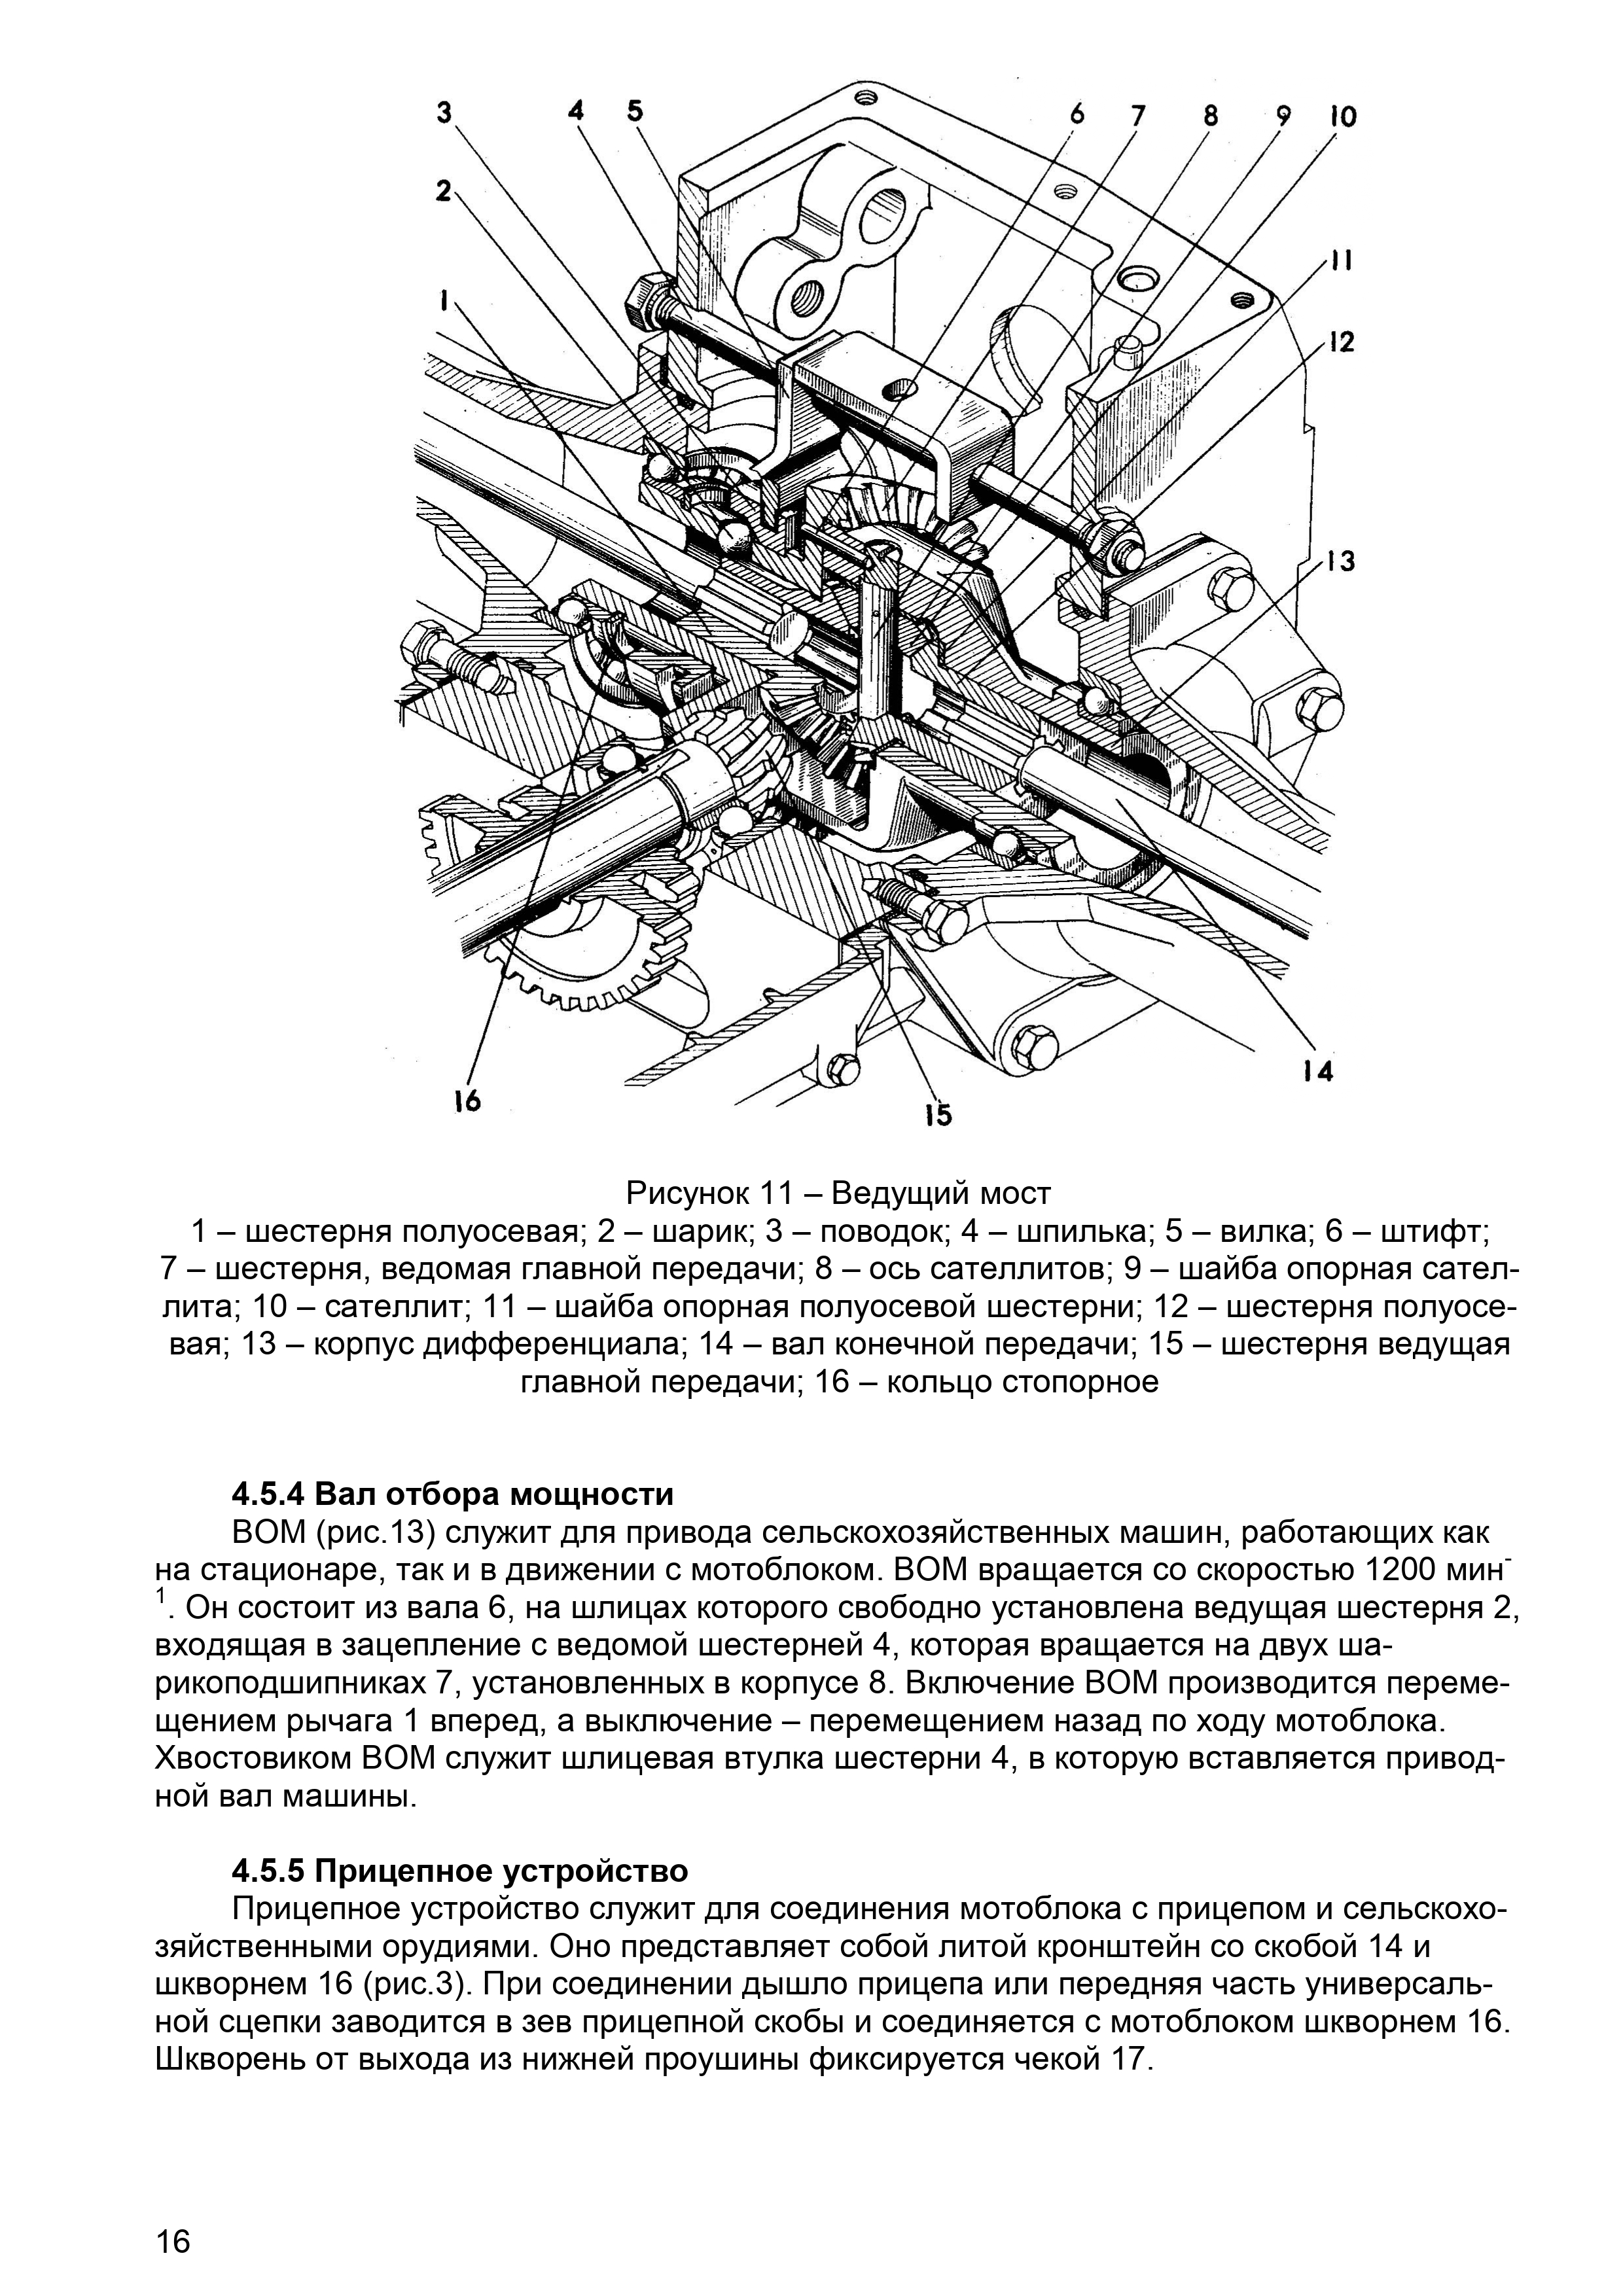 belarus_09h_manual i catalog (1)_page-0016